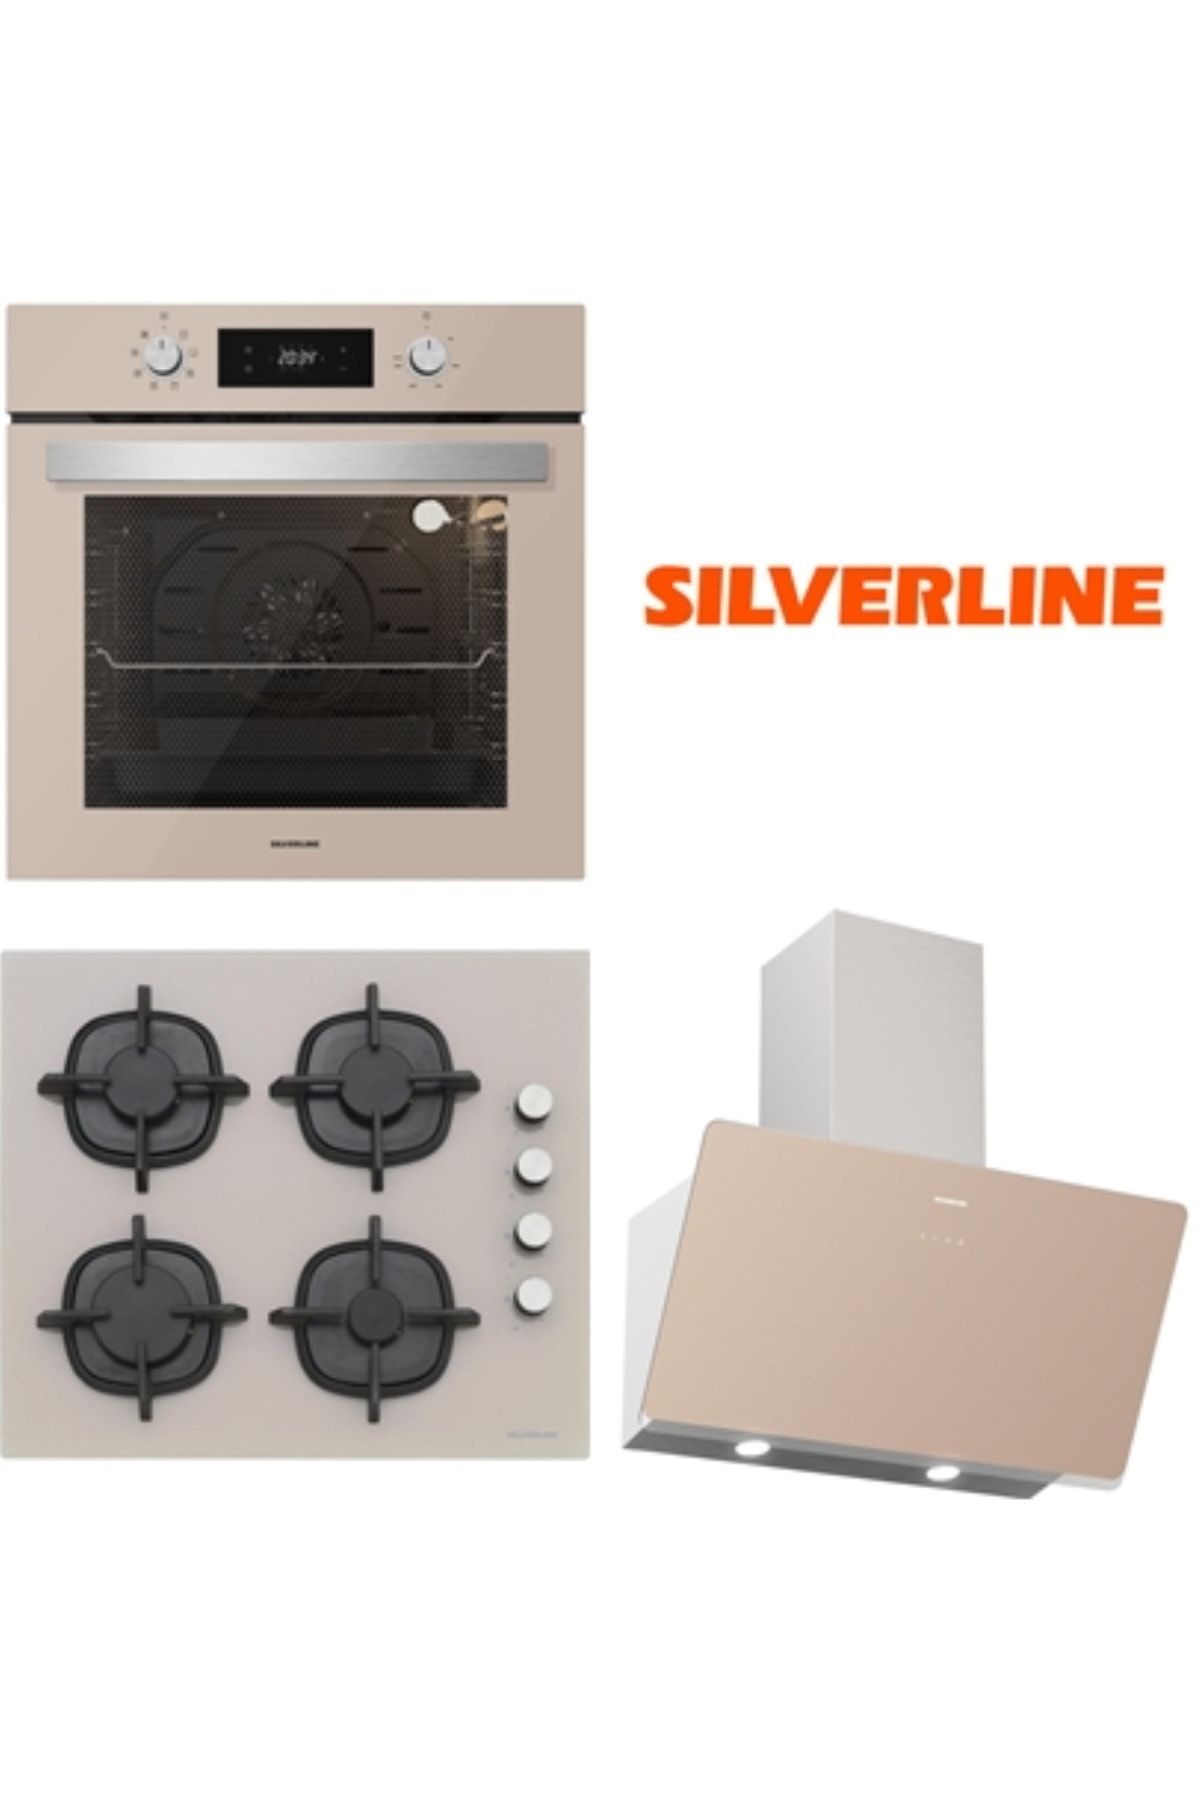 Silverline Vizon Cam Set Bo6504m01 - Cs5343m01 -3457 Soho